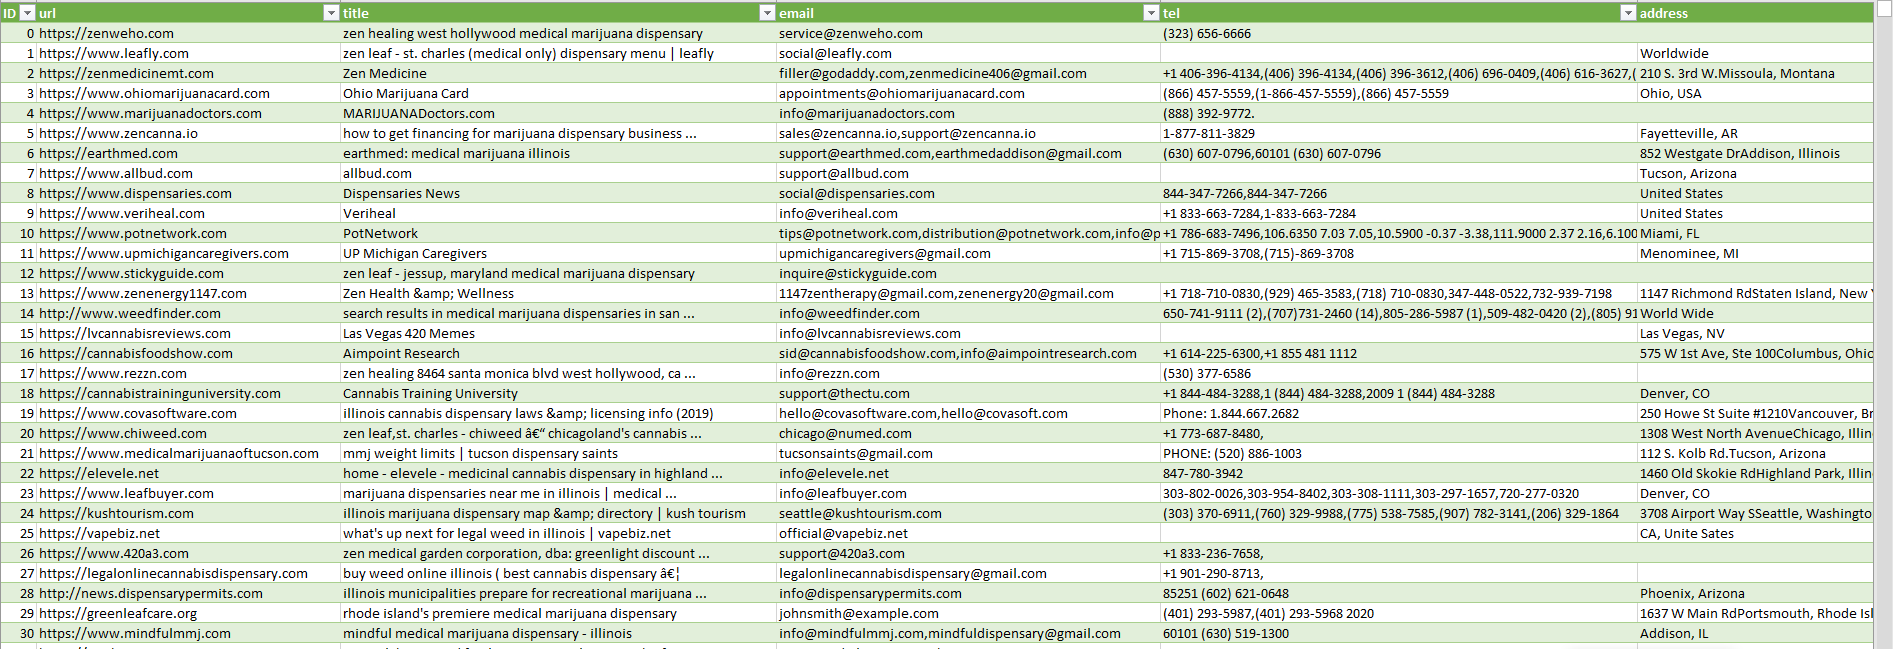 Sample Screenshot 1 of the USA Marijuana Dispensaries B2B Business Data List with Cannabis Dispensary Emails